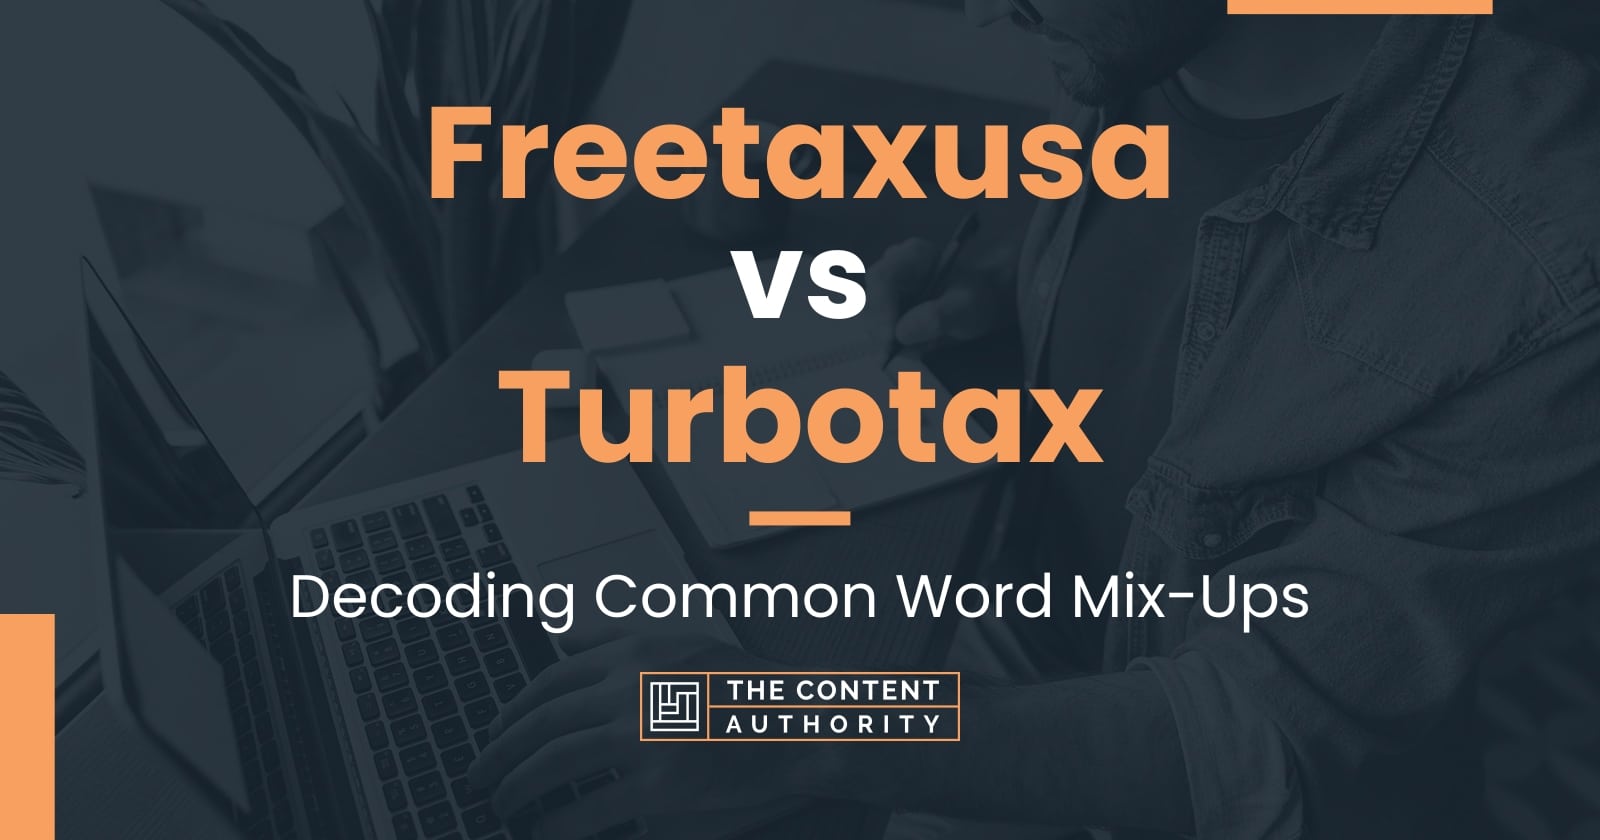 Freetaxusa vs Turbotax Decoding Common Word MixUps